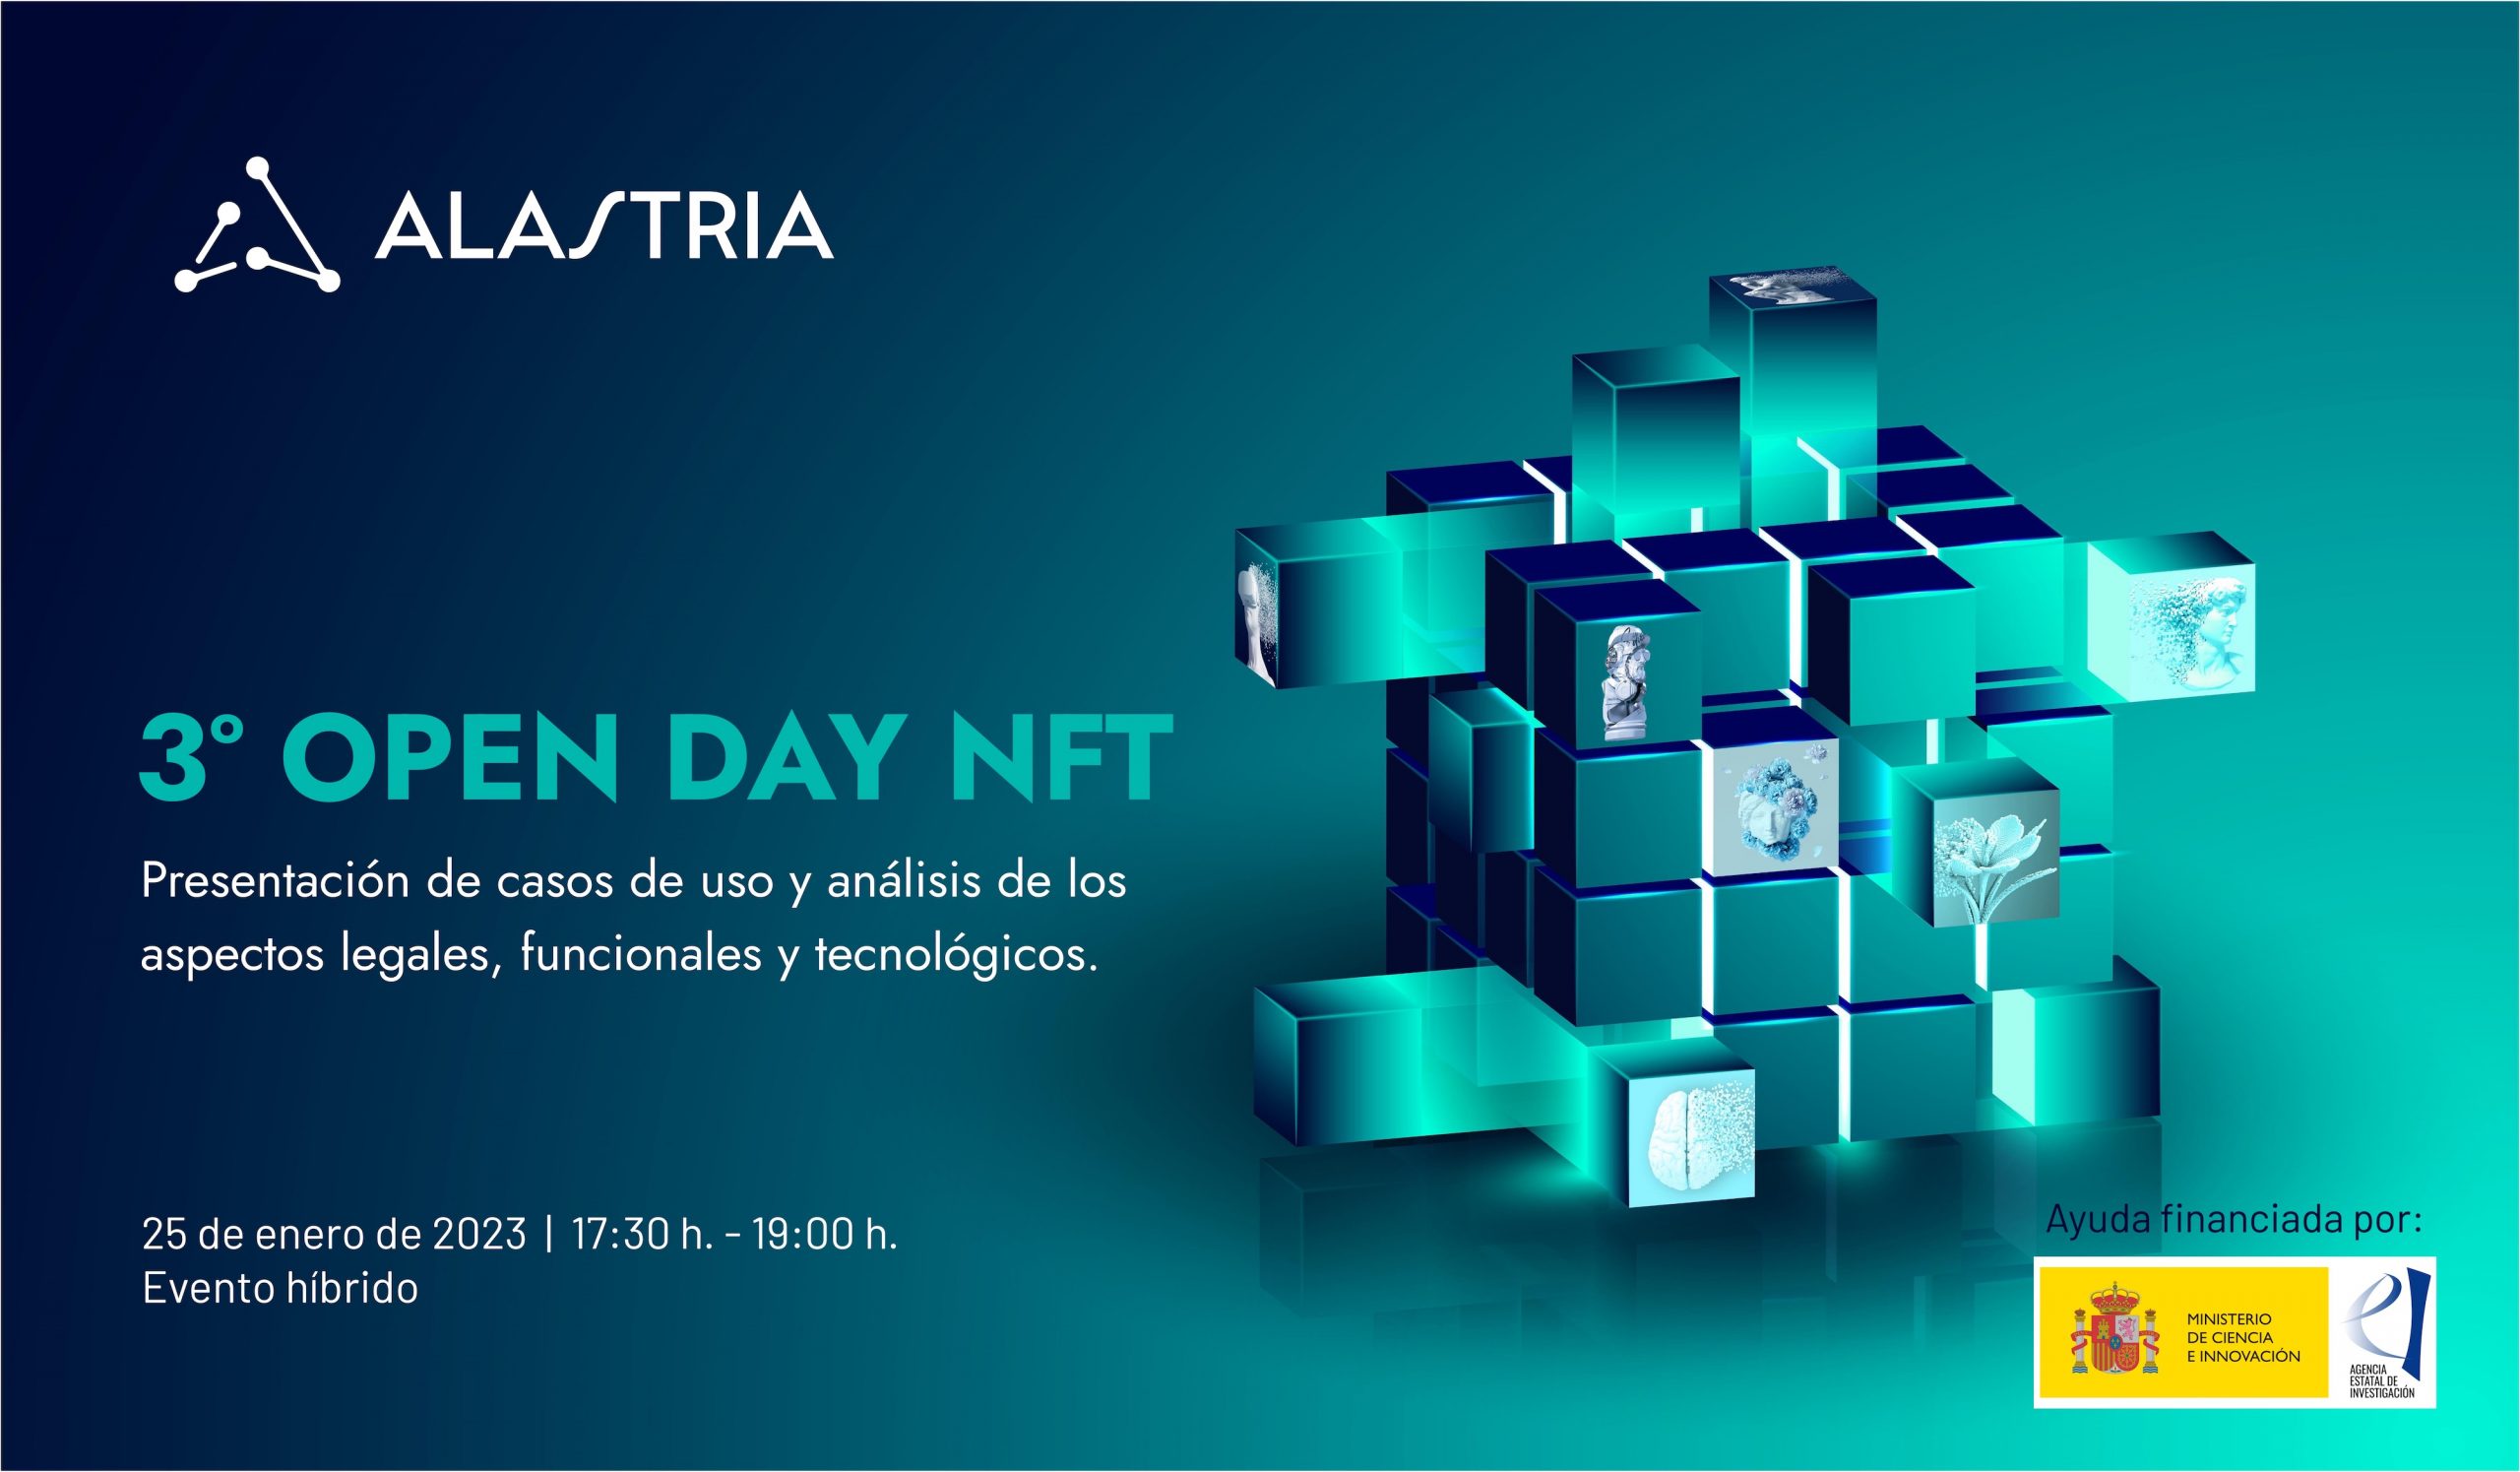 3º Open Day NFT of Alastria